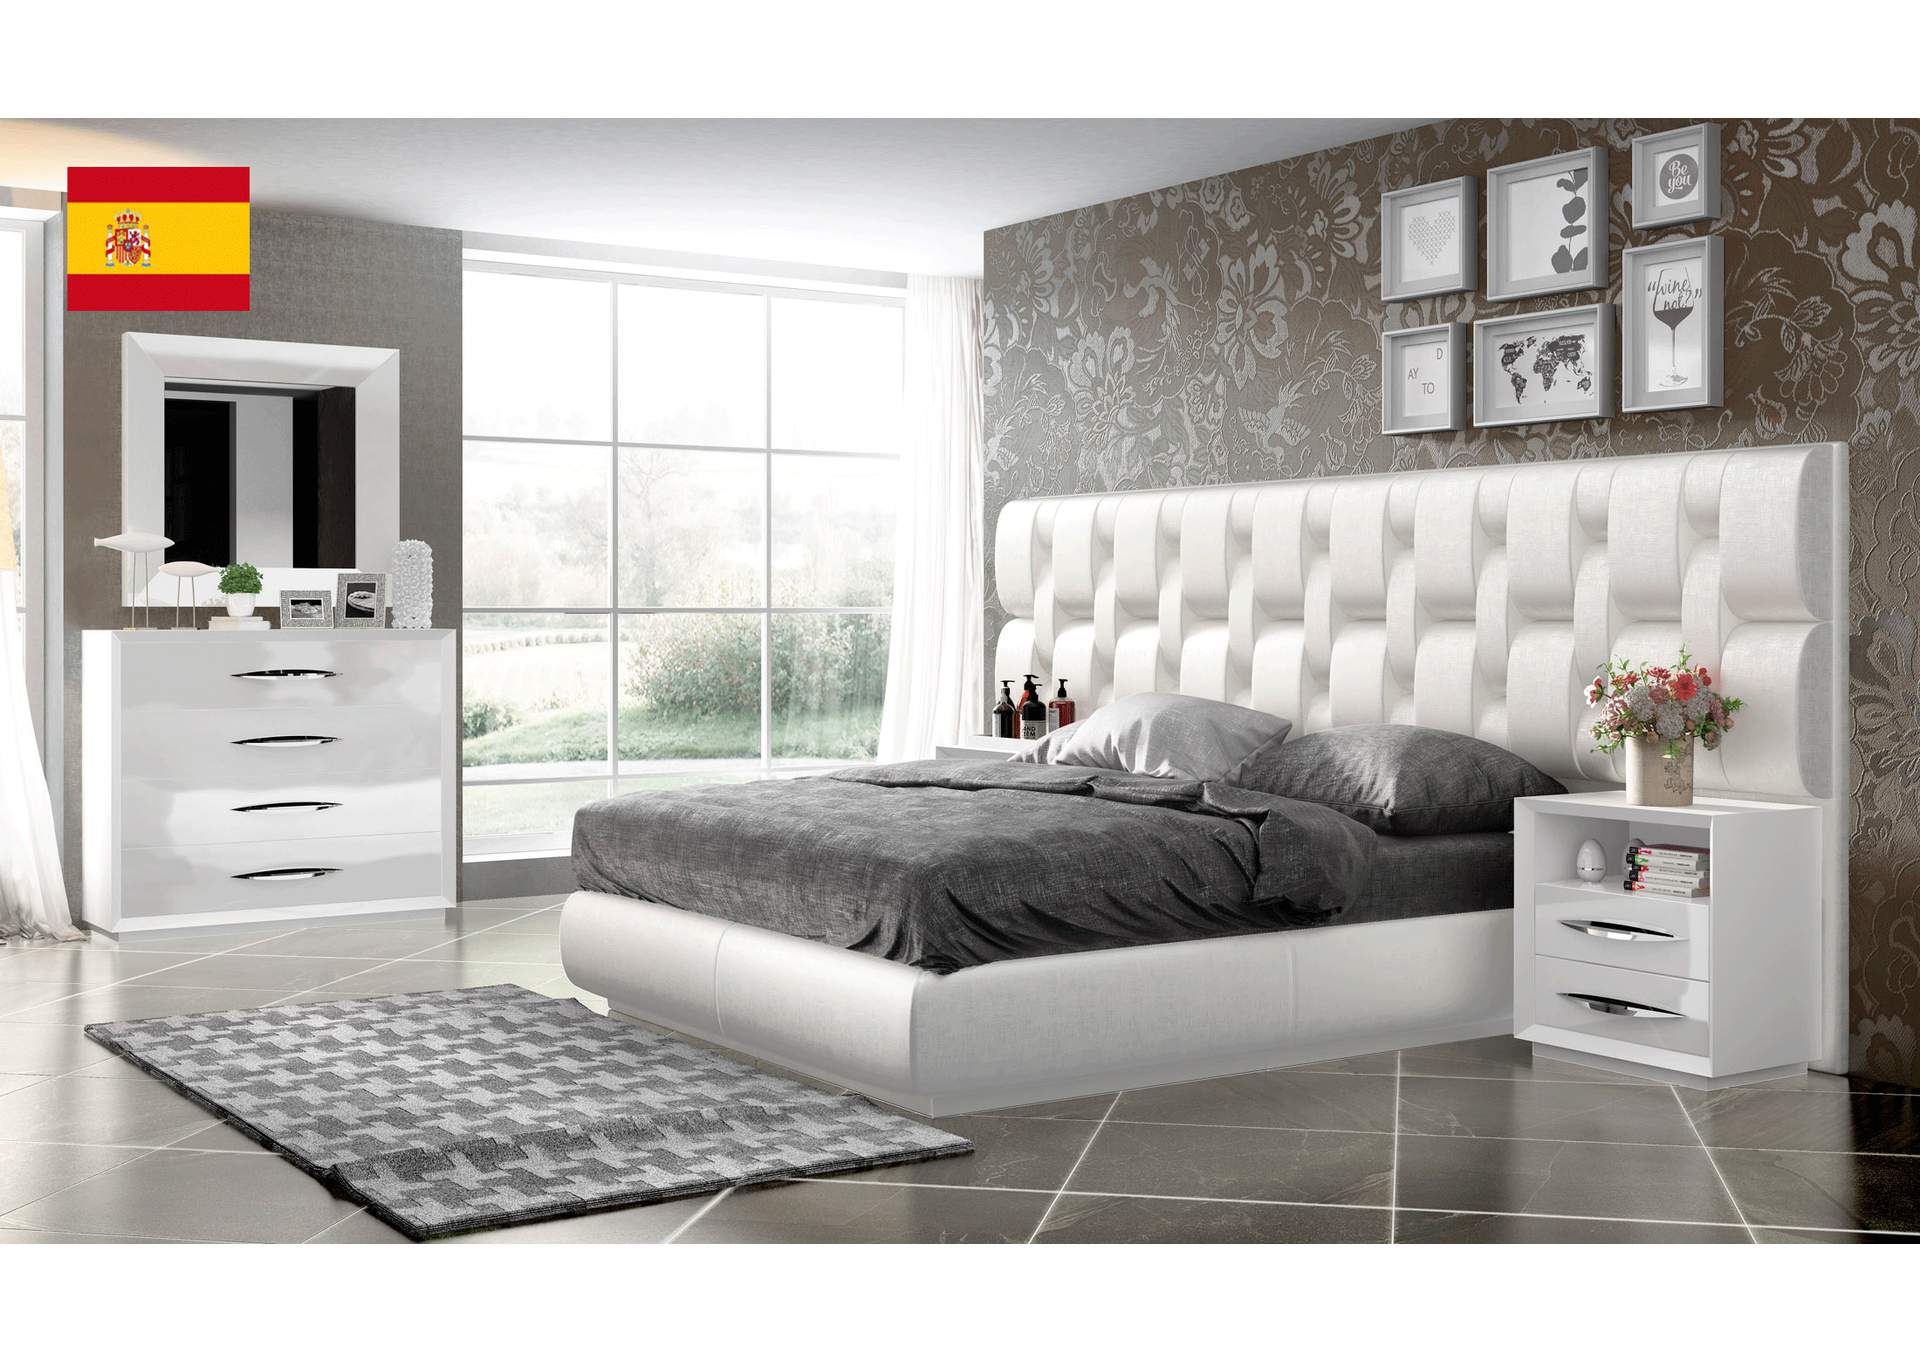 Emporio White Bedroom SET,ESF Wholesale Furniture